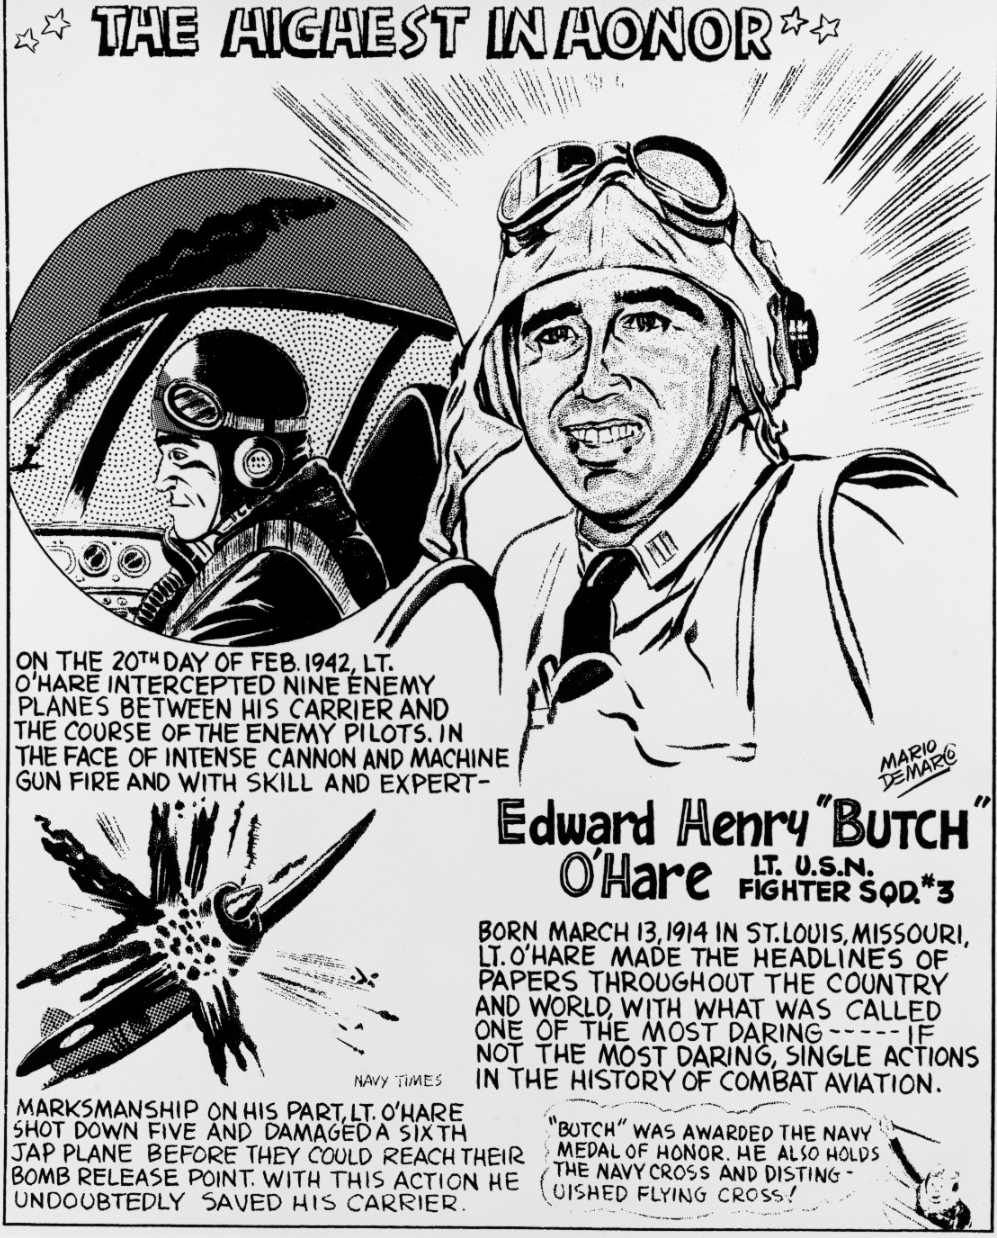 Biographical vignette providing the details of Lt. Edward H. “Butch” O’Hare’s air combat exploits